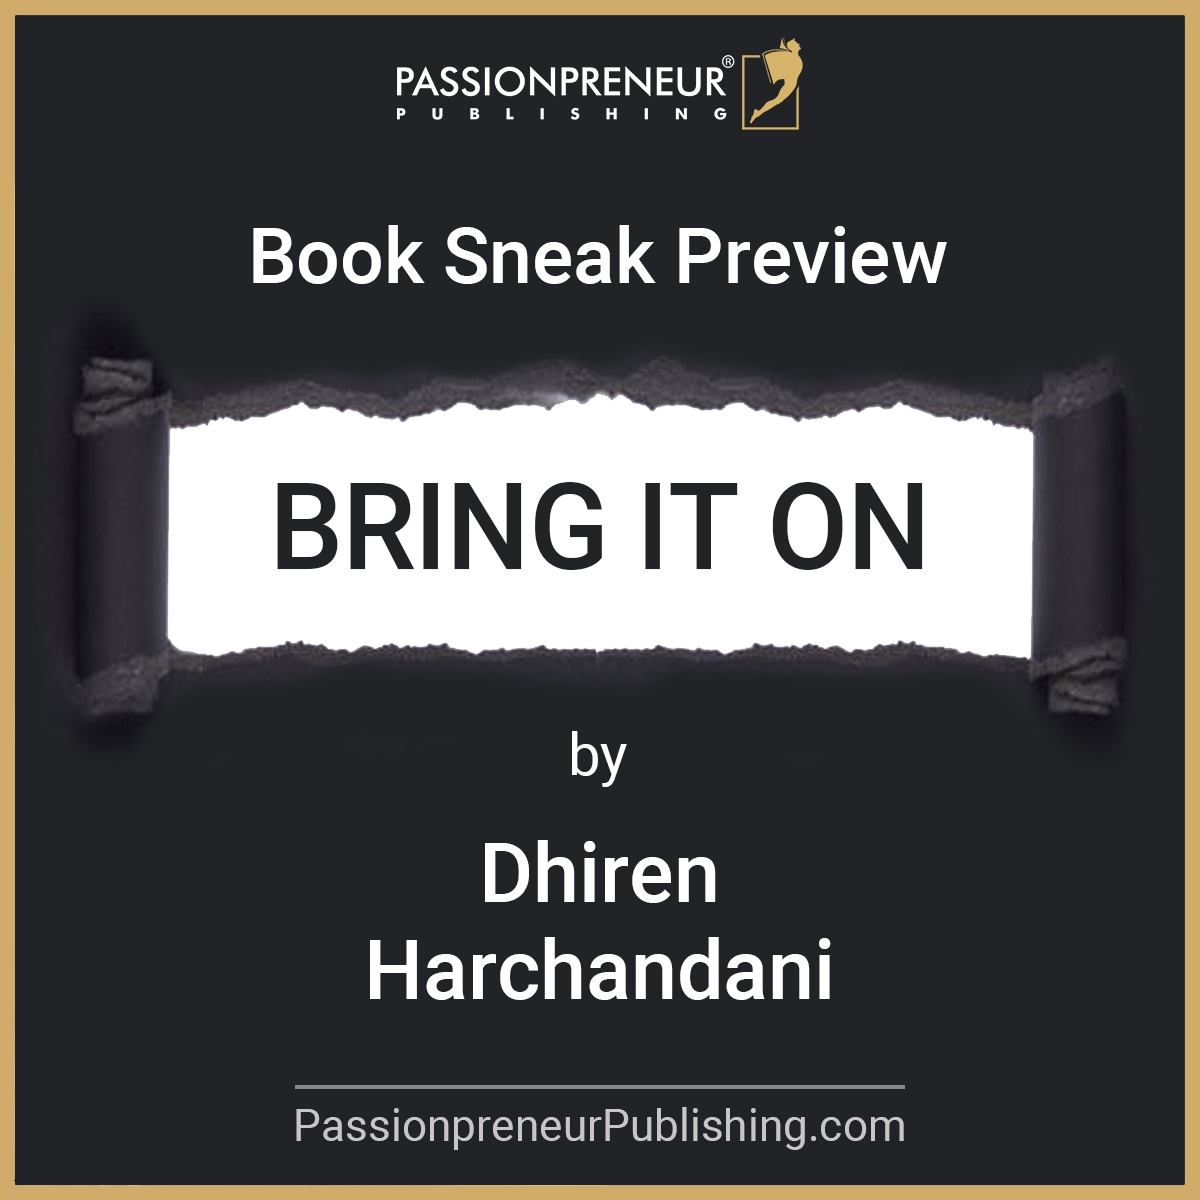 Book Sneak Preview Dhiren Harchandani